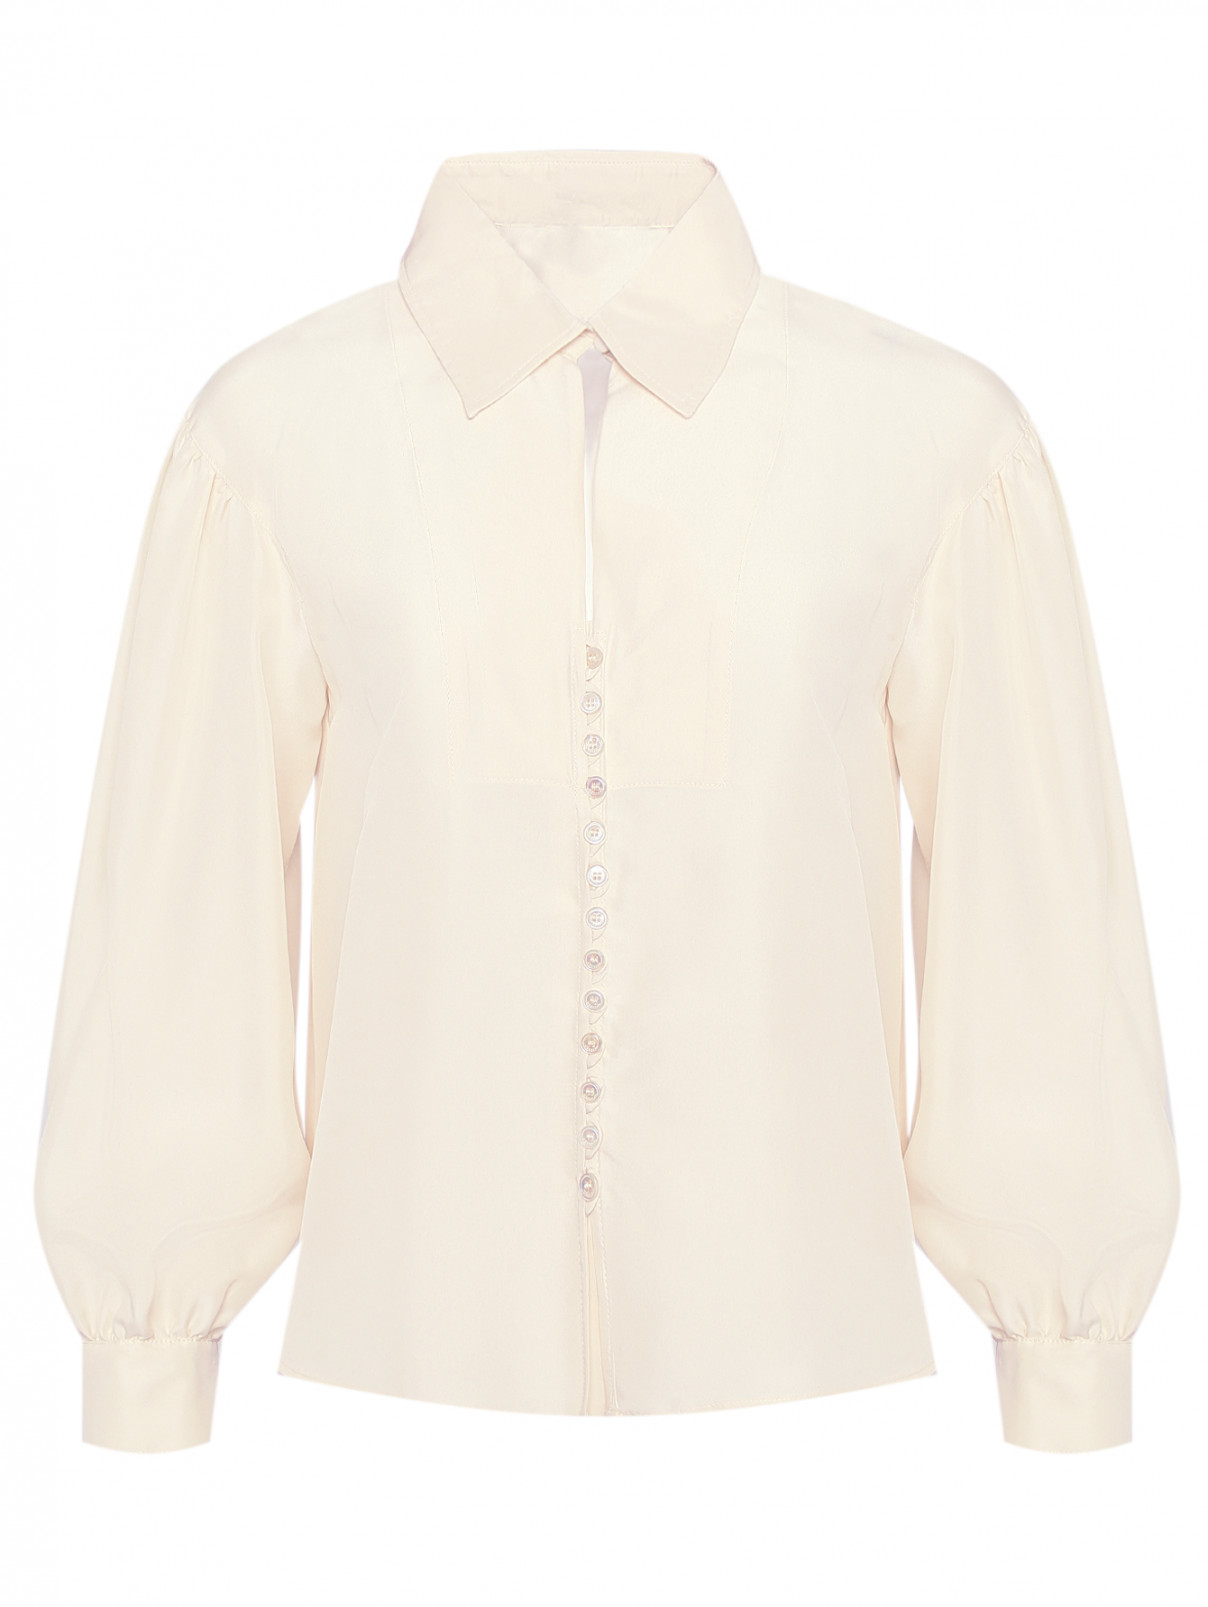 Однотонная блуза из шелка на пуговицах Weekend Max Mara  –  Общий вид  – Цвет:  Бежевый